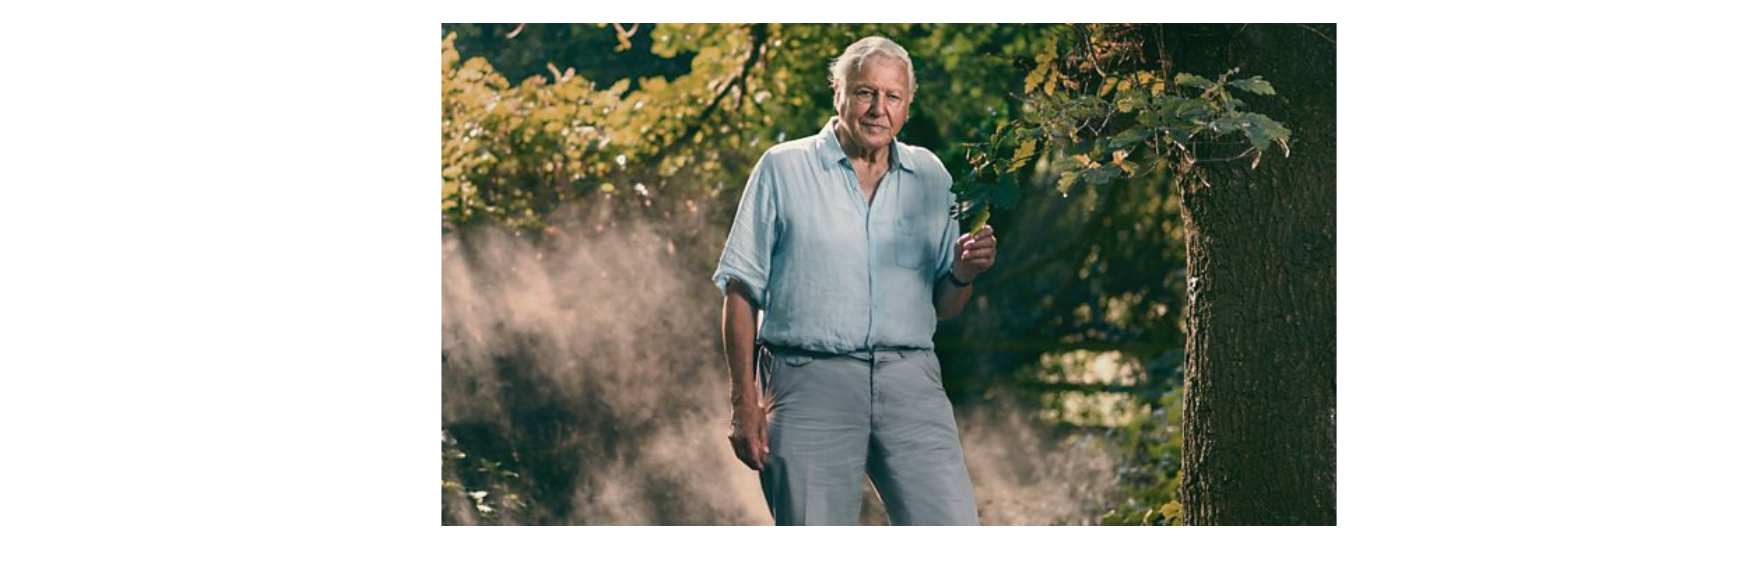 David Attenborough in woods